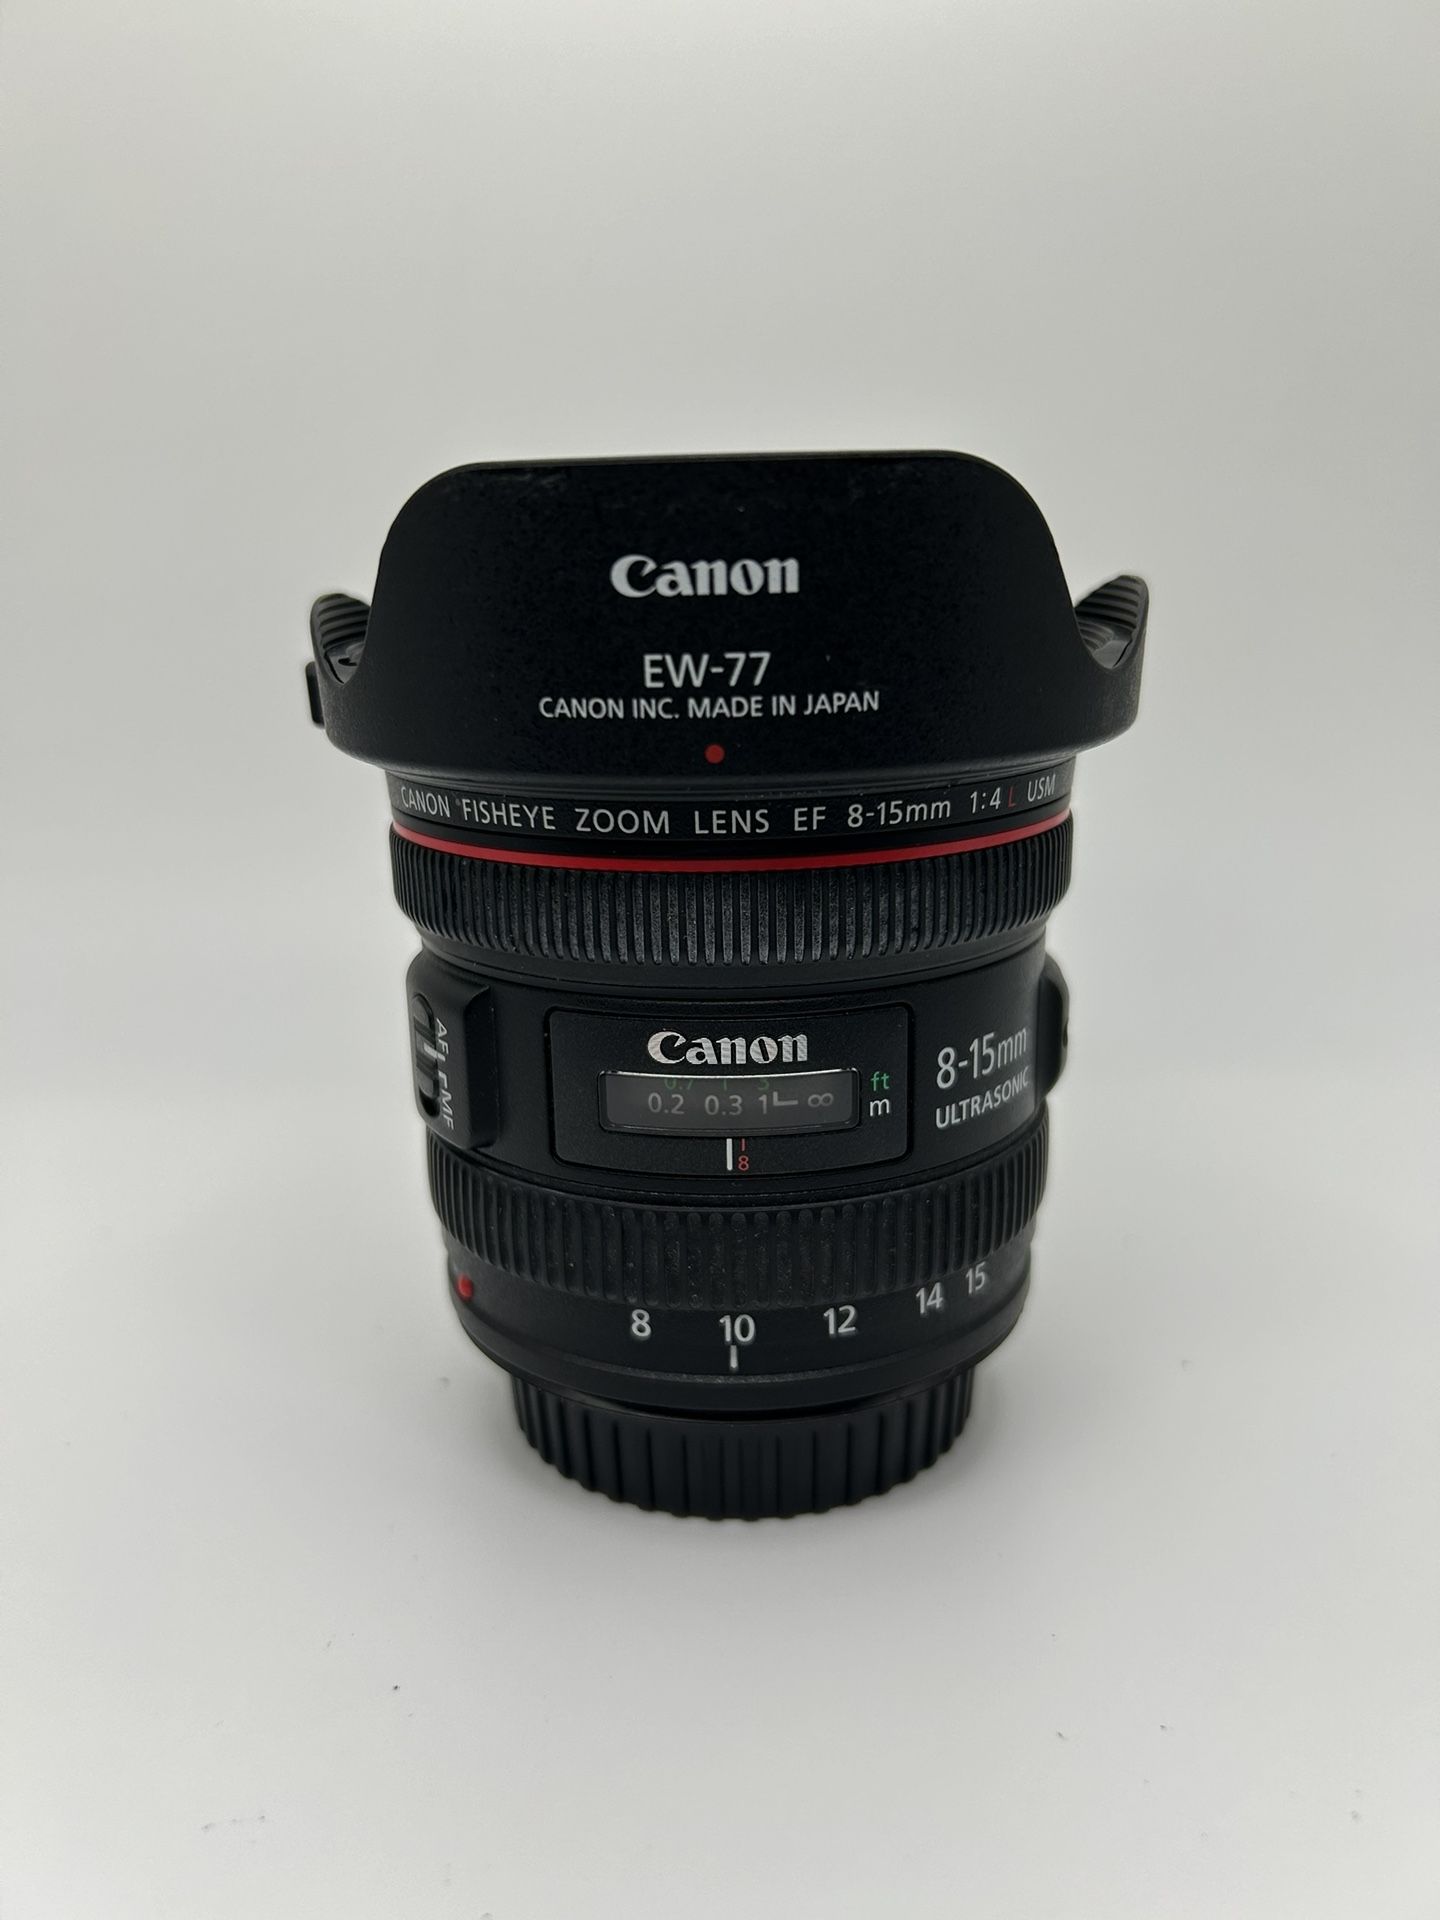 Canon L Series EF 8-15mm f/4L Fisheye USM with Canon EW-77 